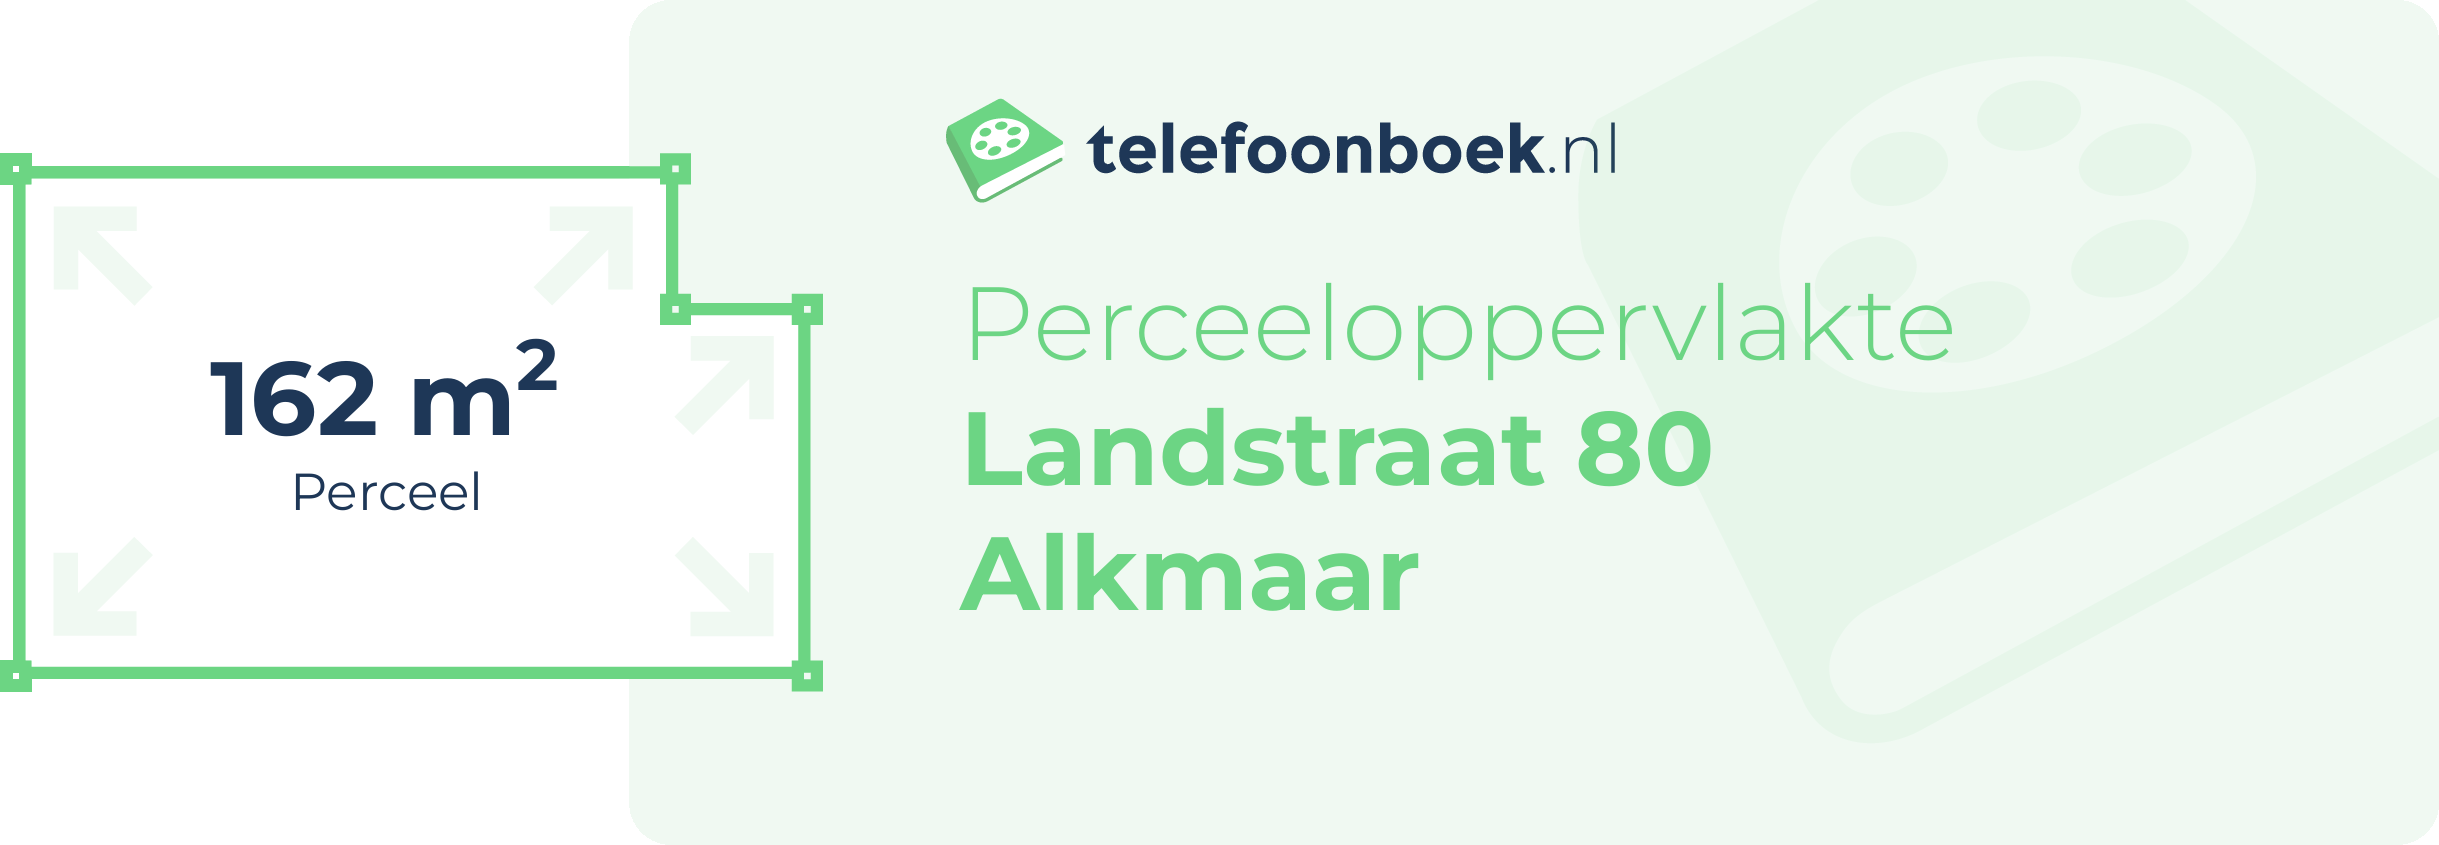 Perceeloppervlakte Landstraat 80 Alkmaar